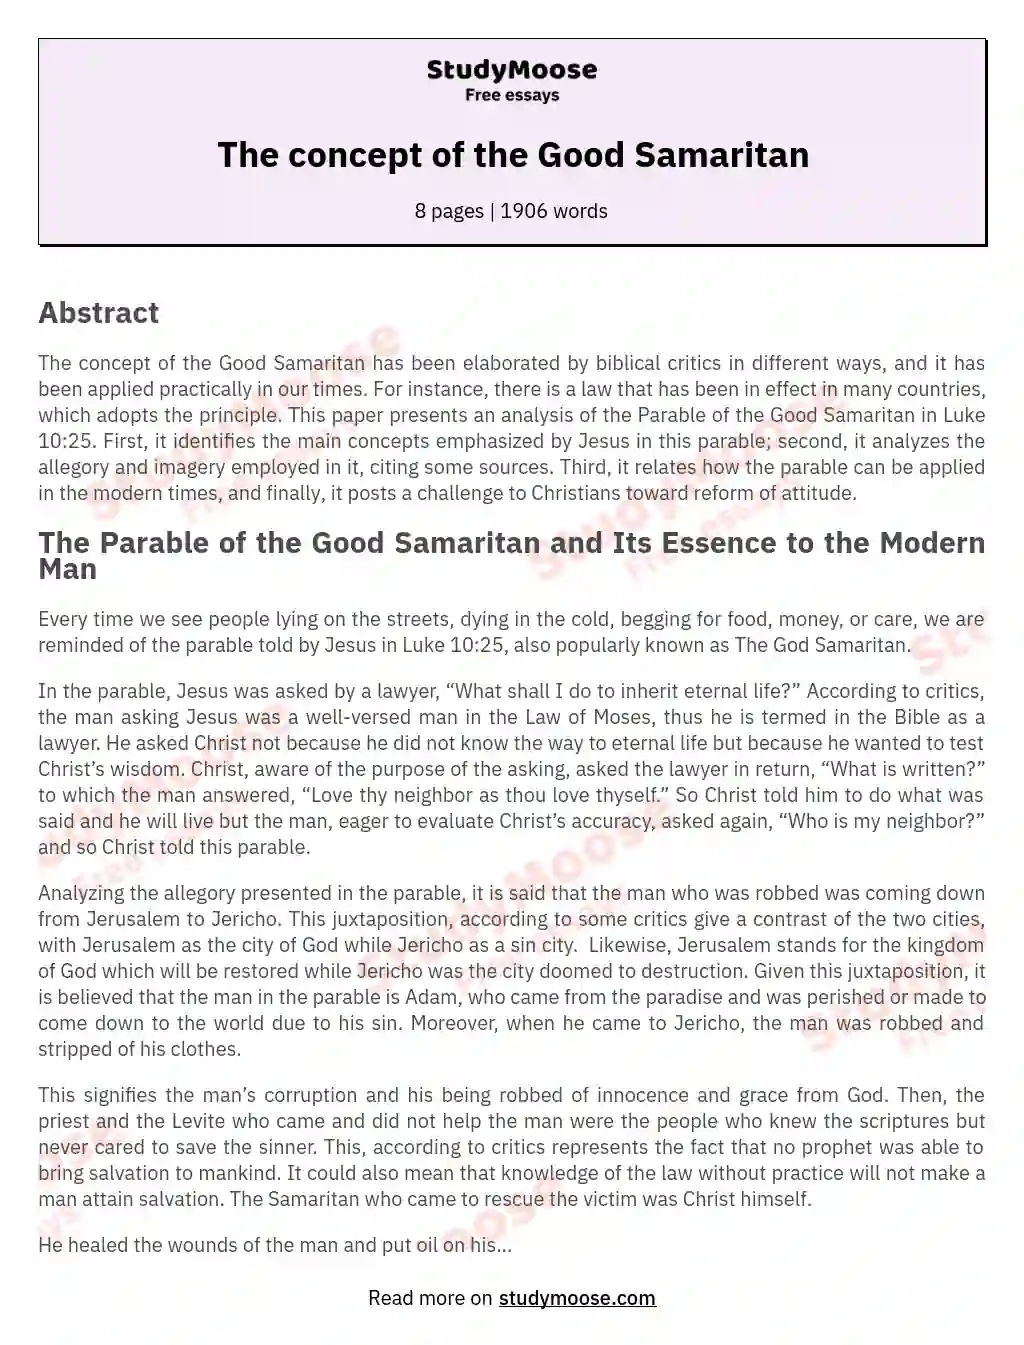 The concept of the Good Samaritan essay